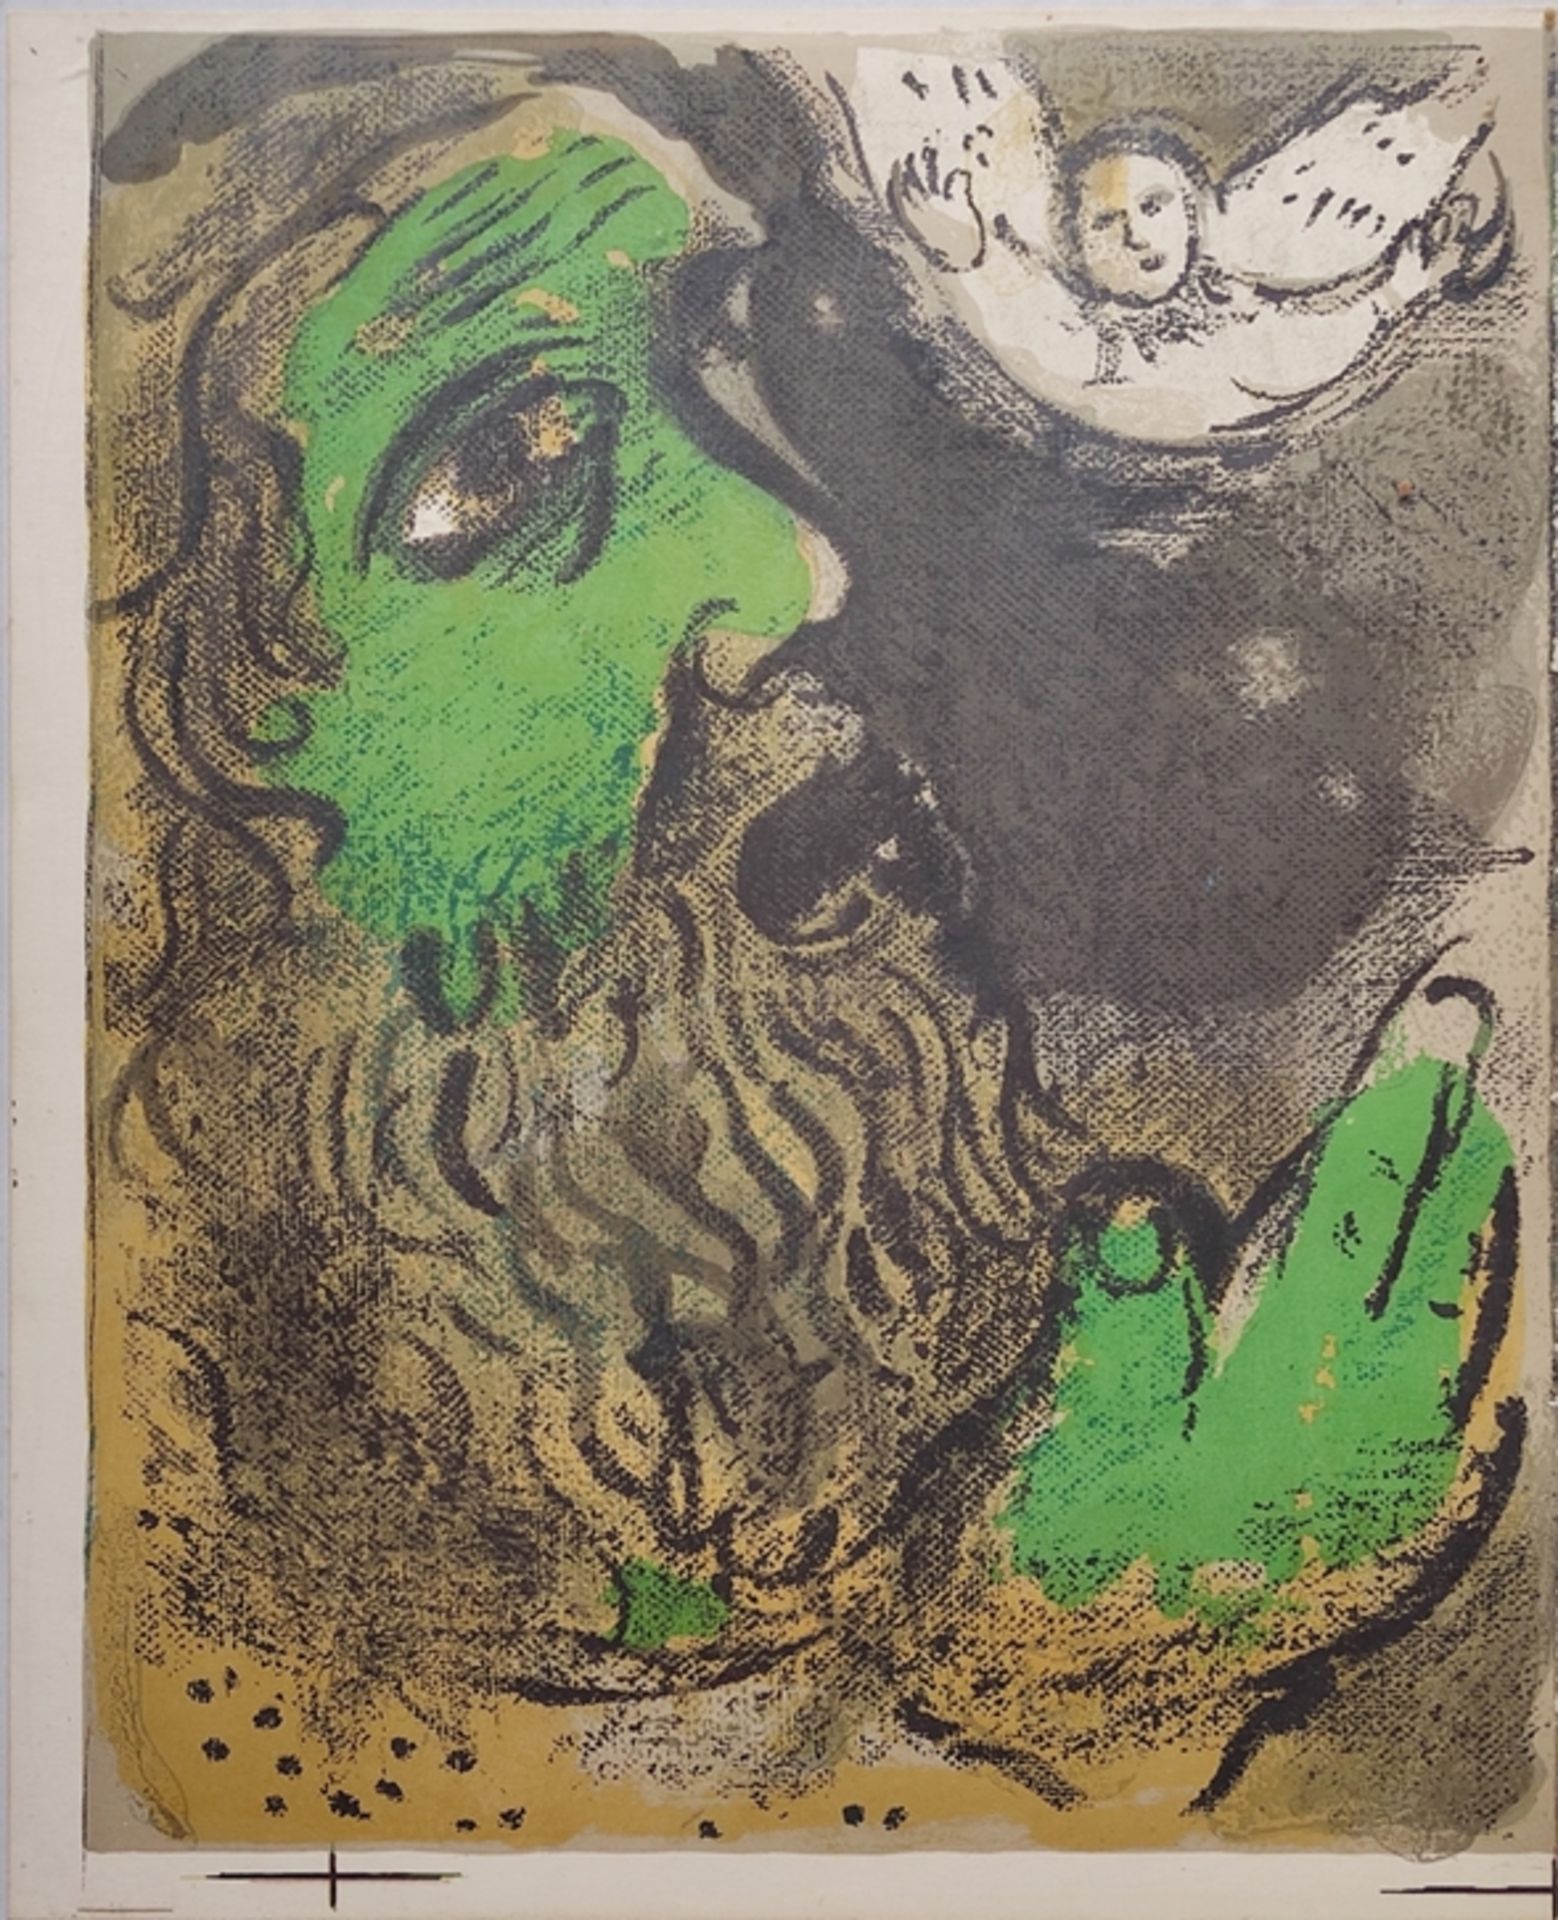 Chagall, Marc (1887 Vitebsk - 1985 Paul de Vence) "The praying Job", colour lithograph on detached